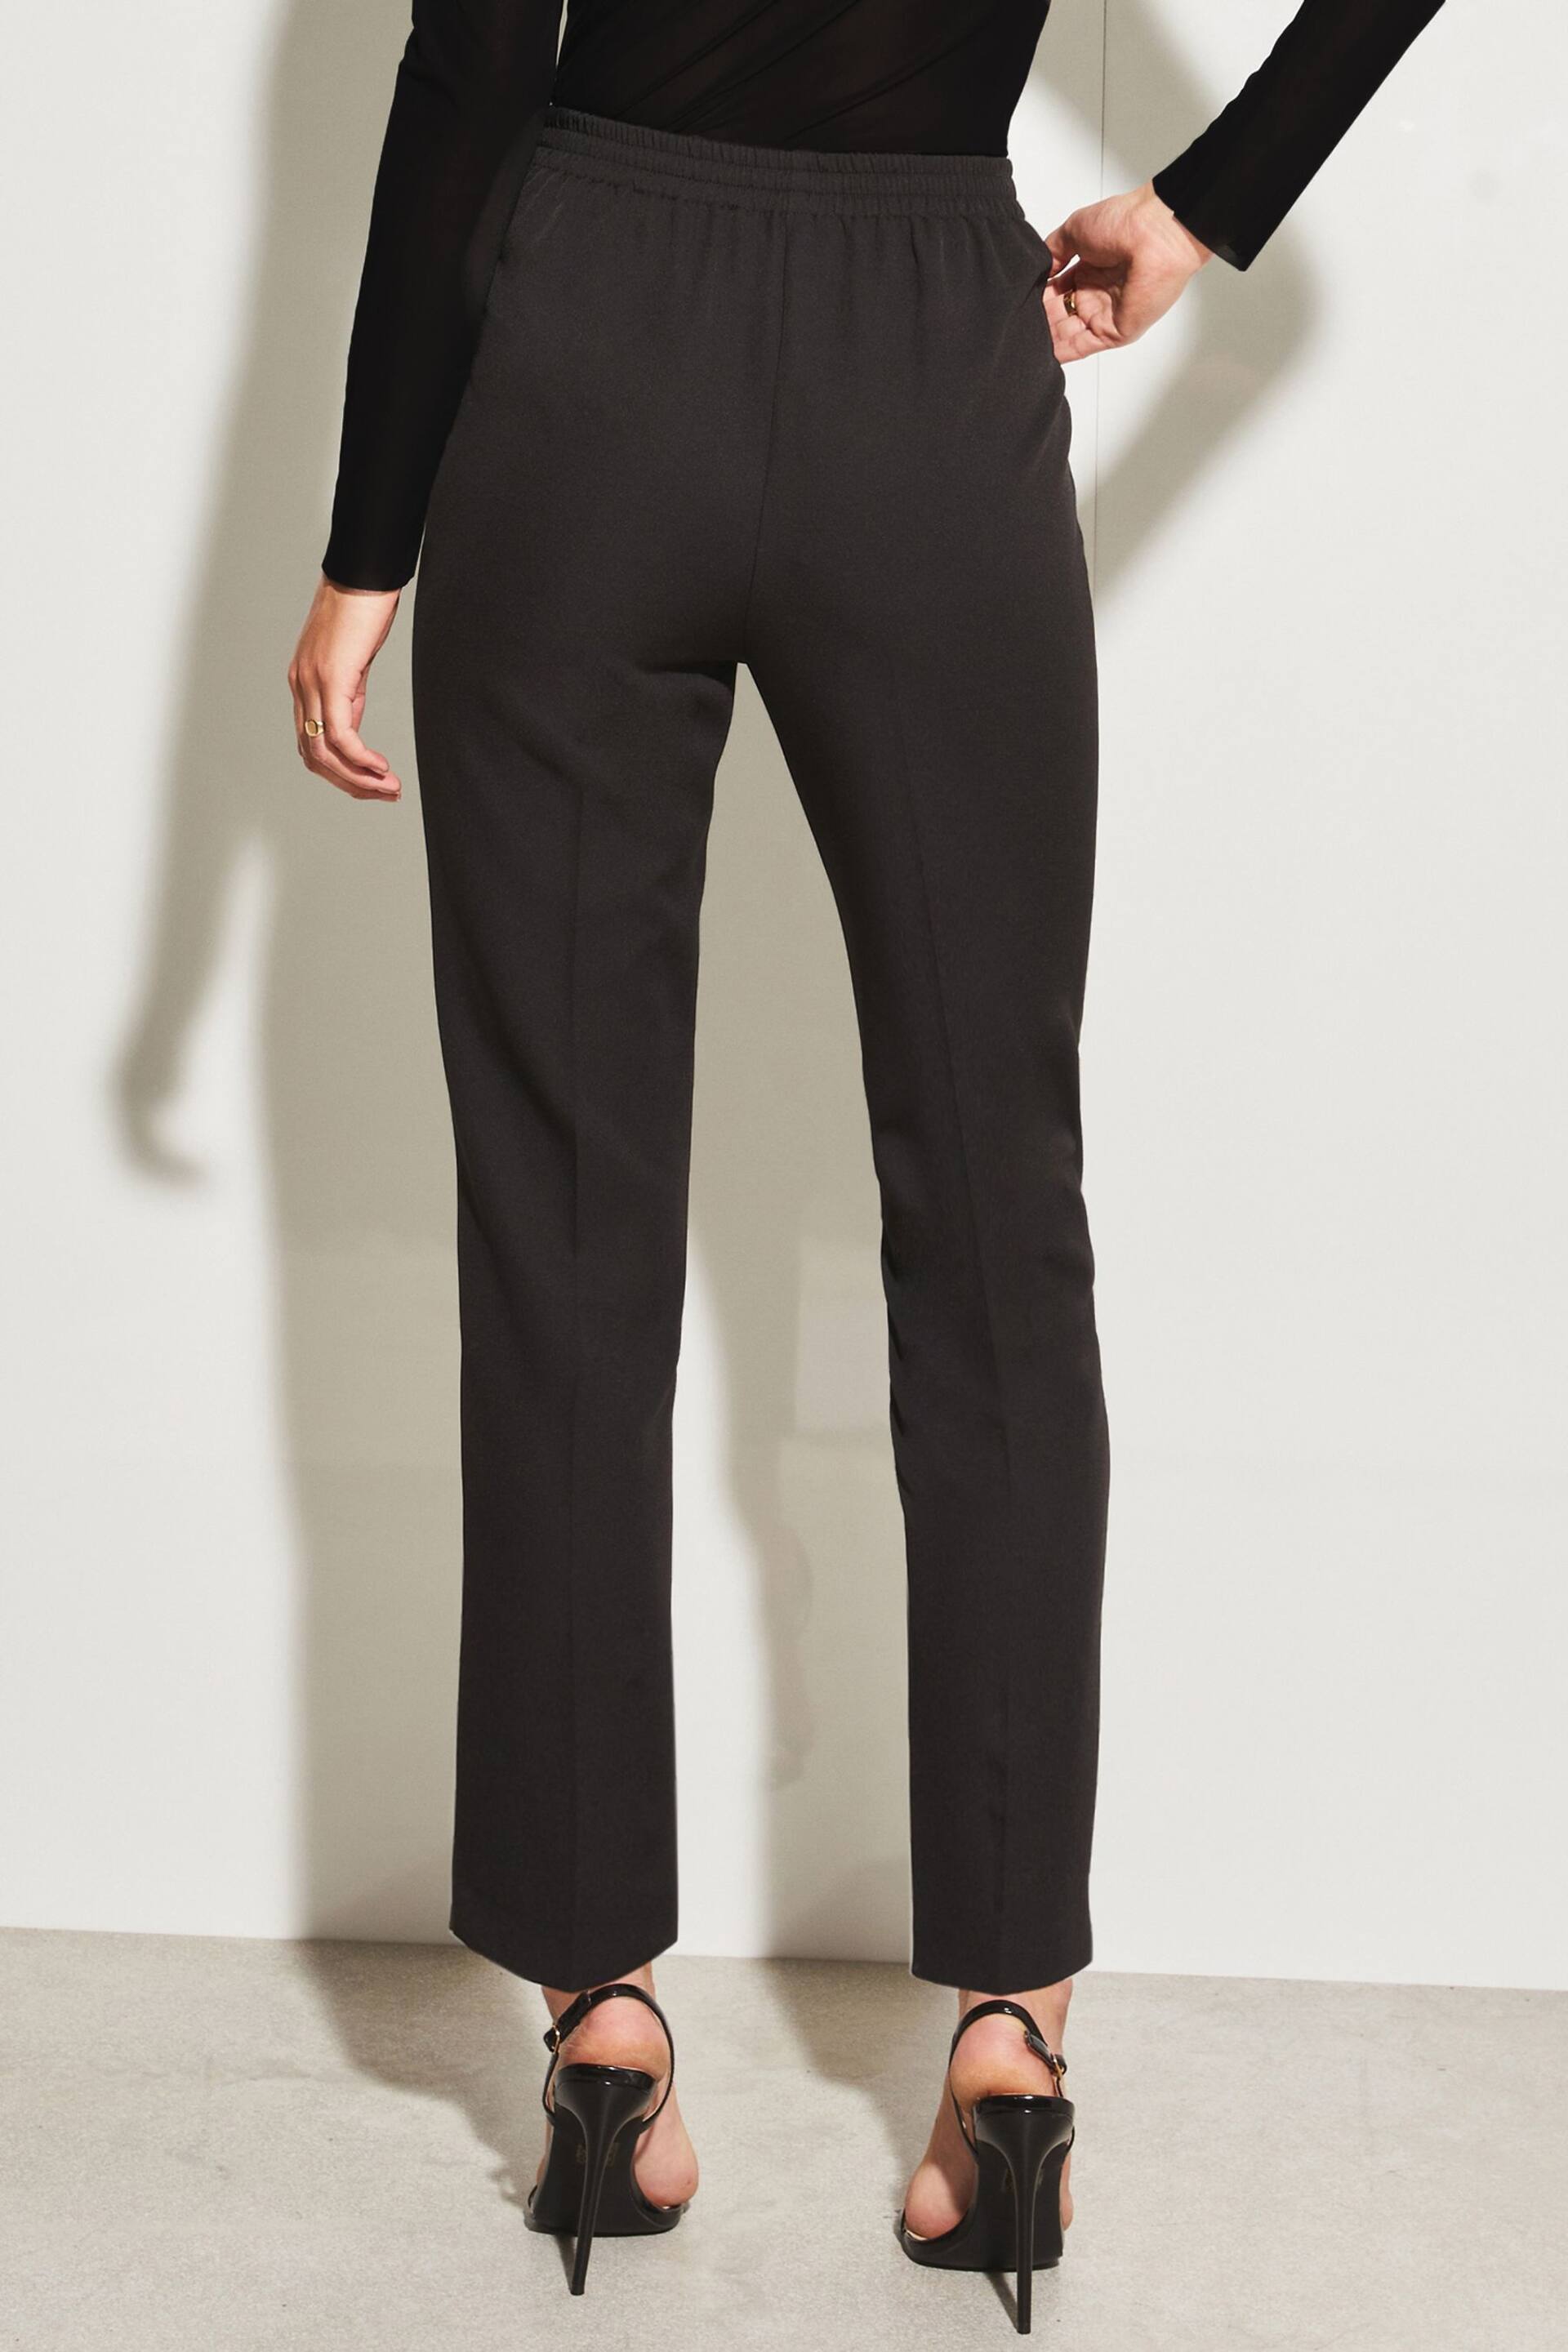 Lipsy Black Tailored Trim Detail Slim Leg Trousers - Image 2 of 4